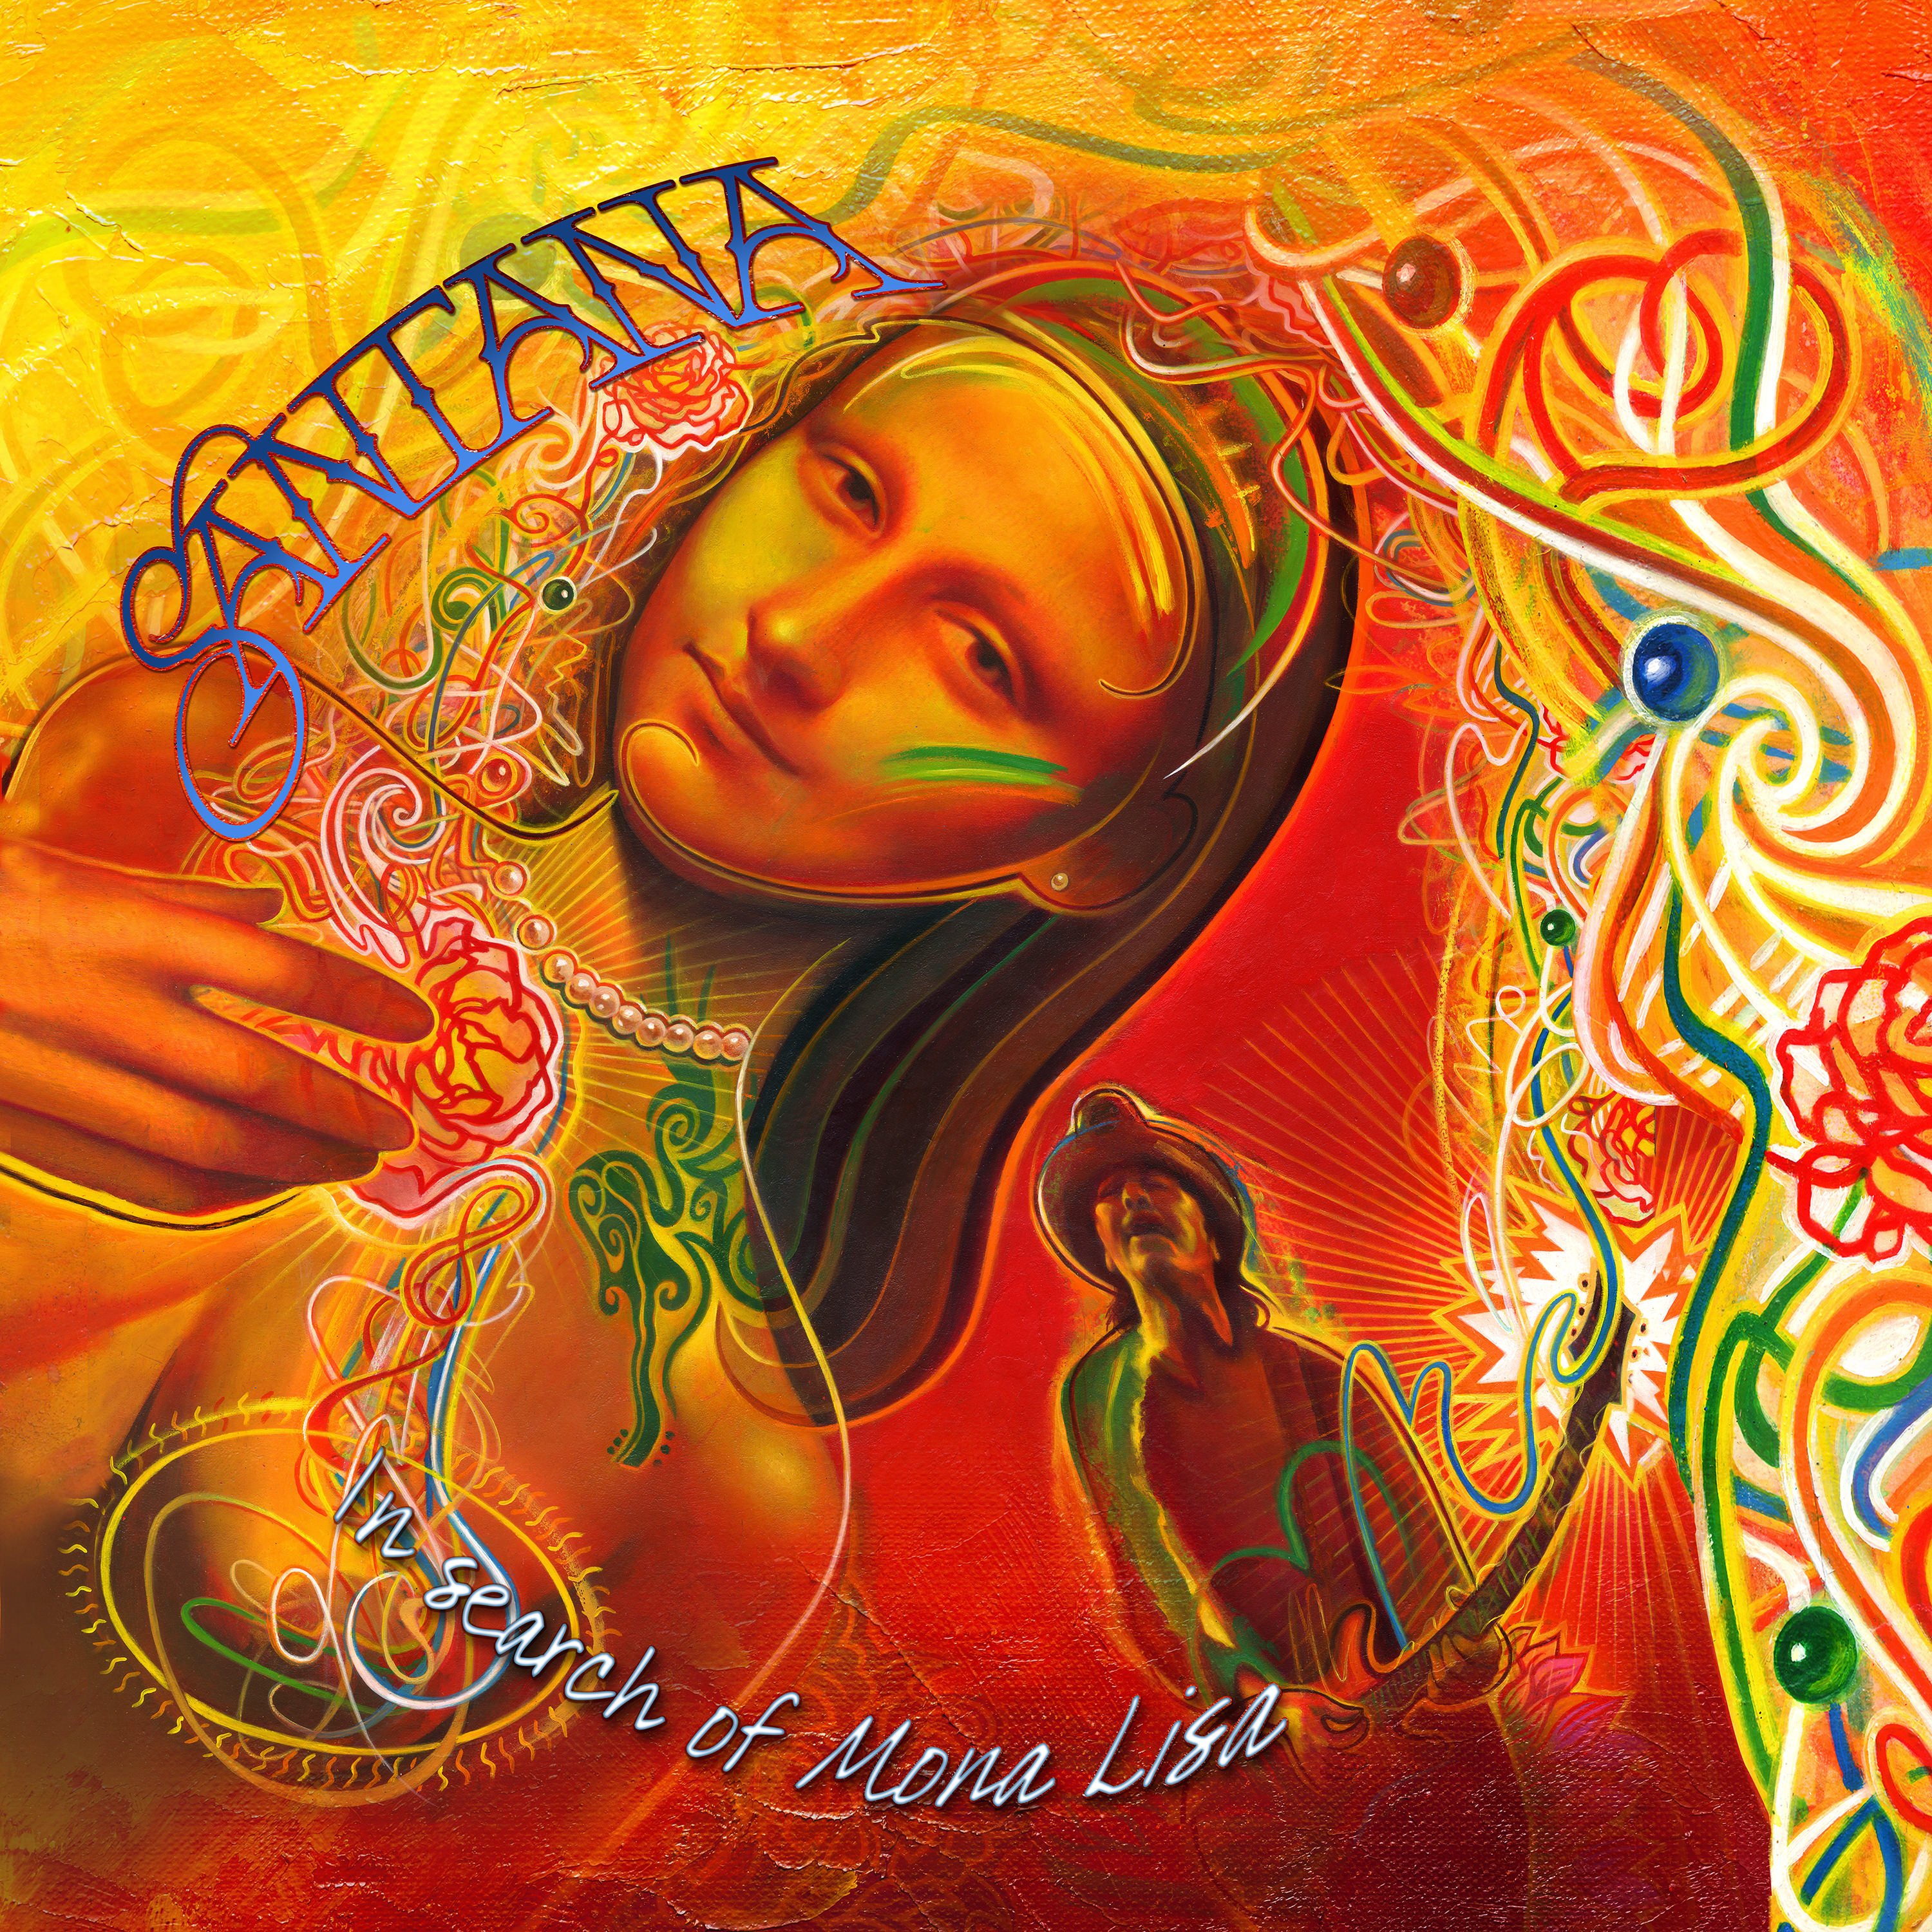 Santana-In Search Of Mona Lisa-24-44-WEB-FLAC-EP-2019-OBZEN Download